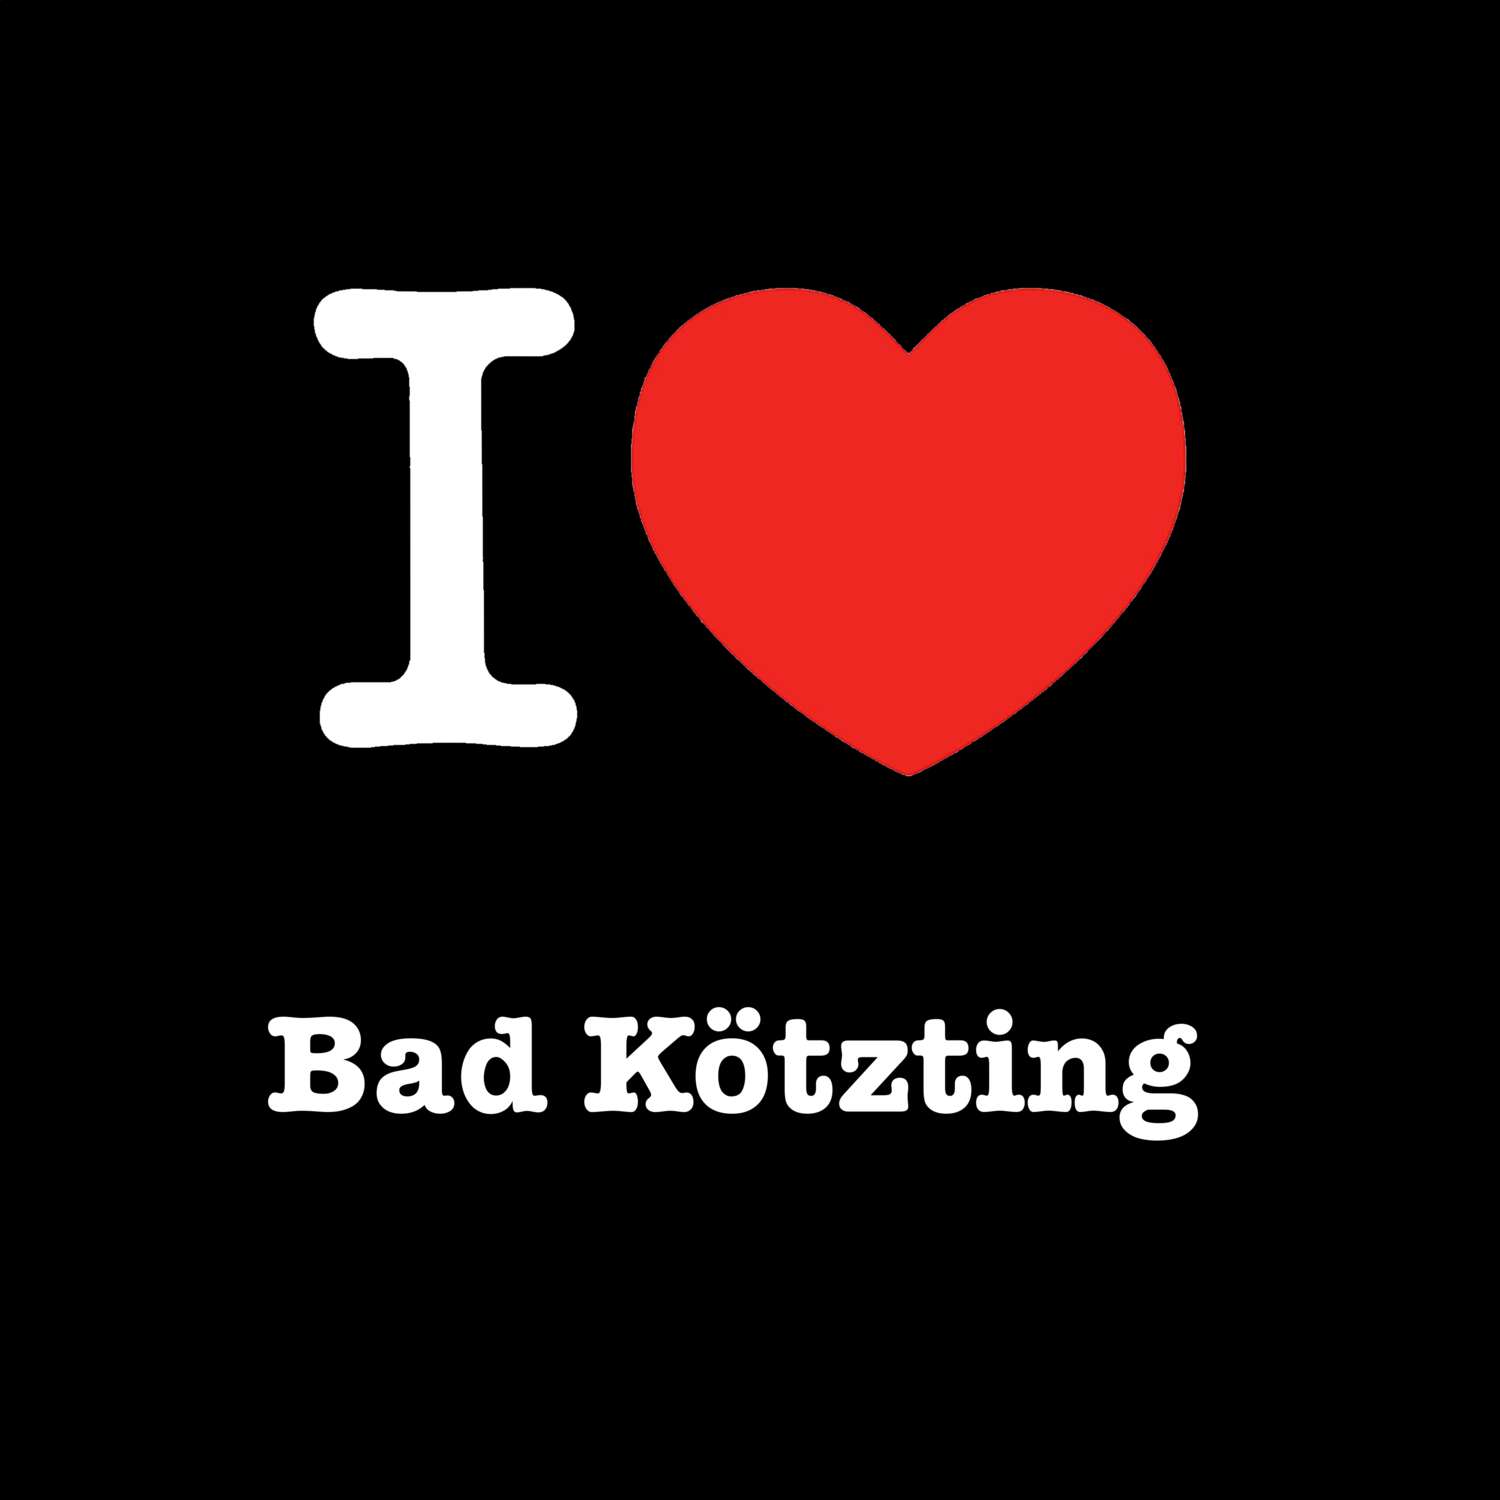 Bad Kötzting T-Shirt »I love«